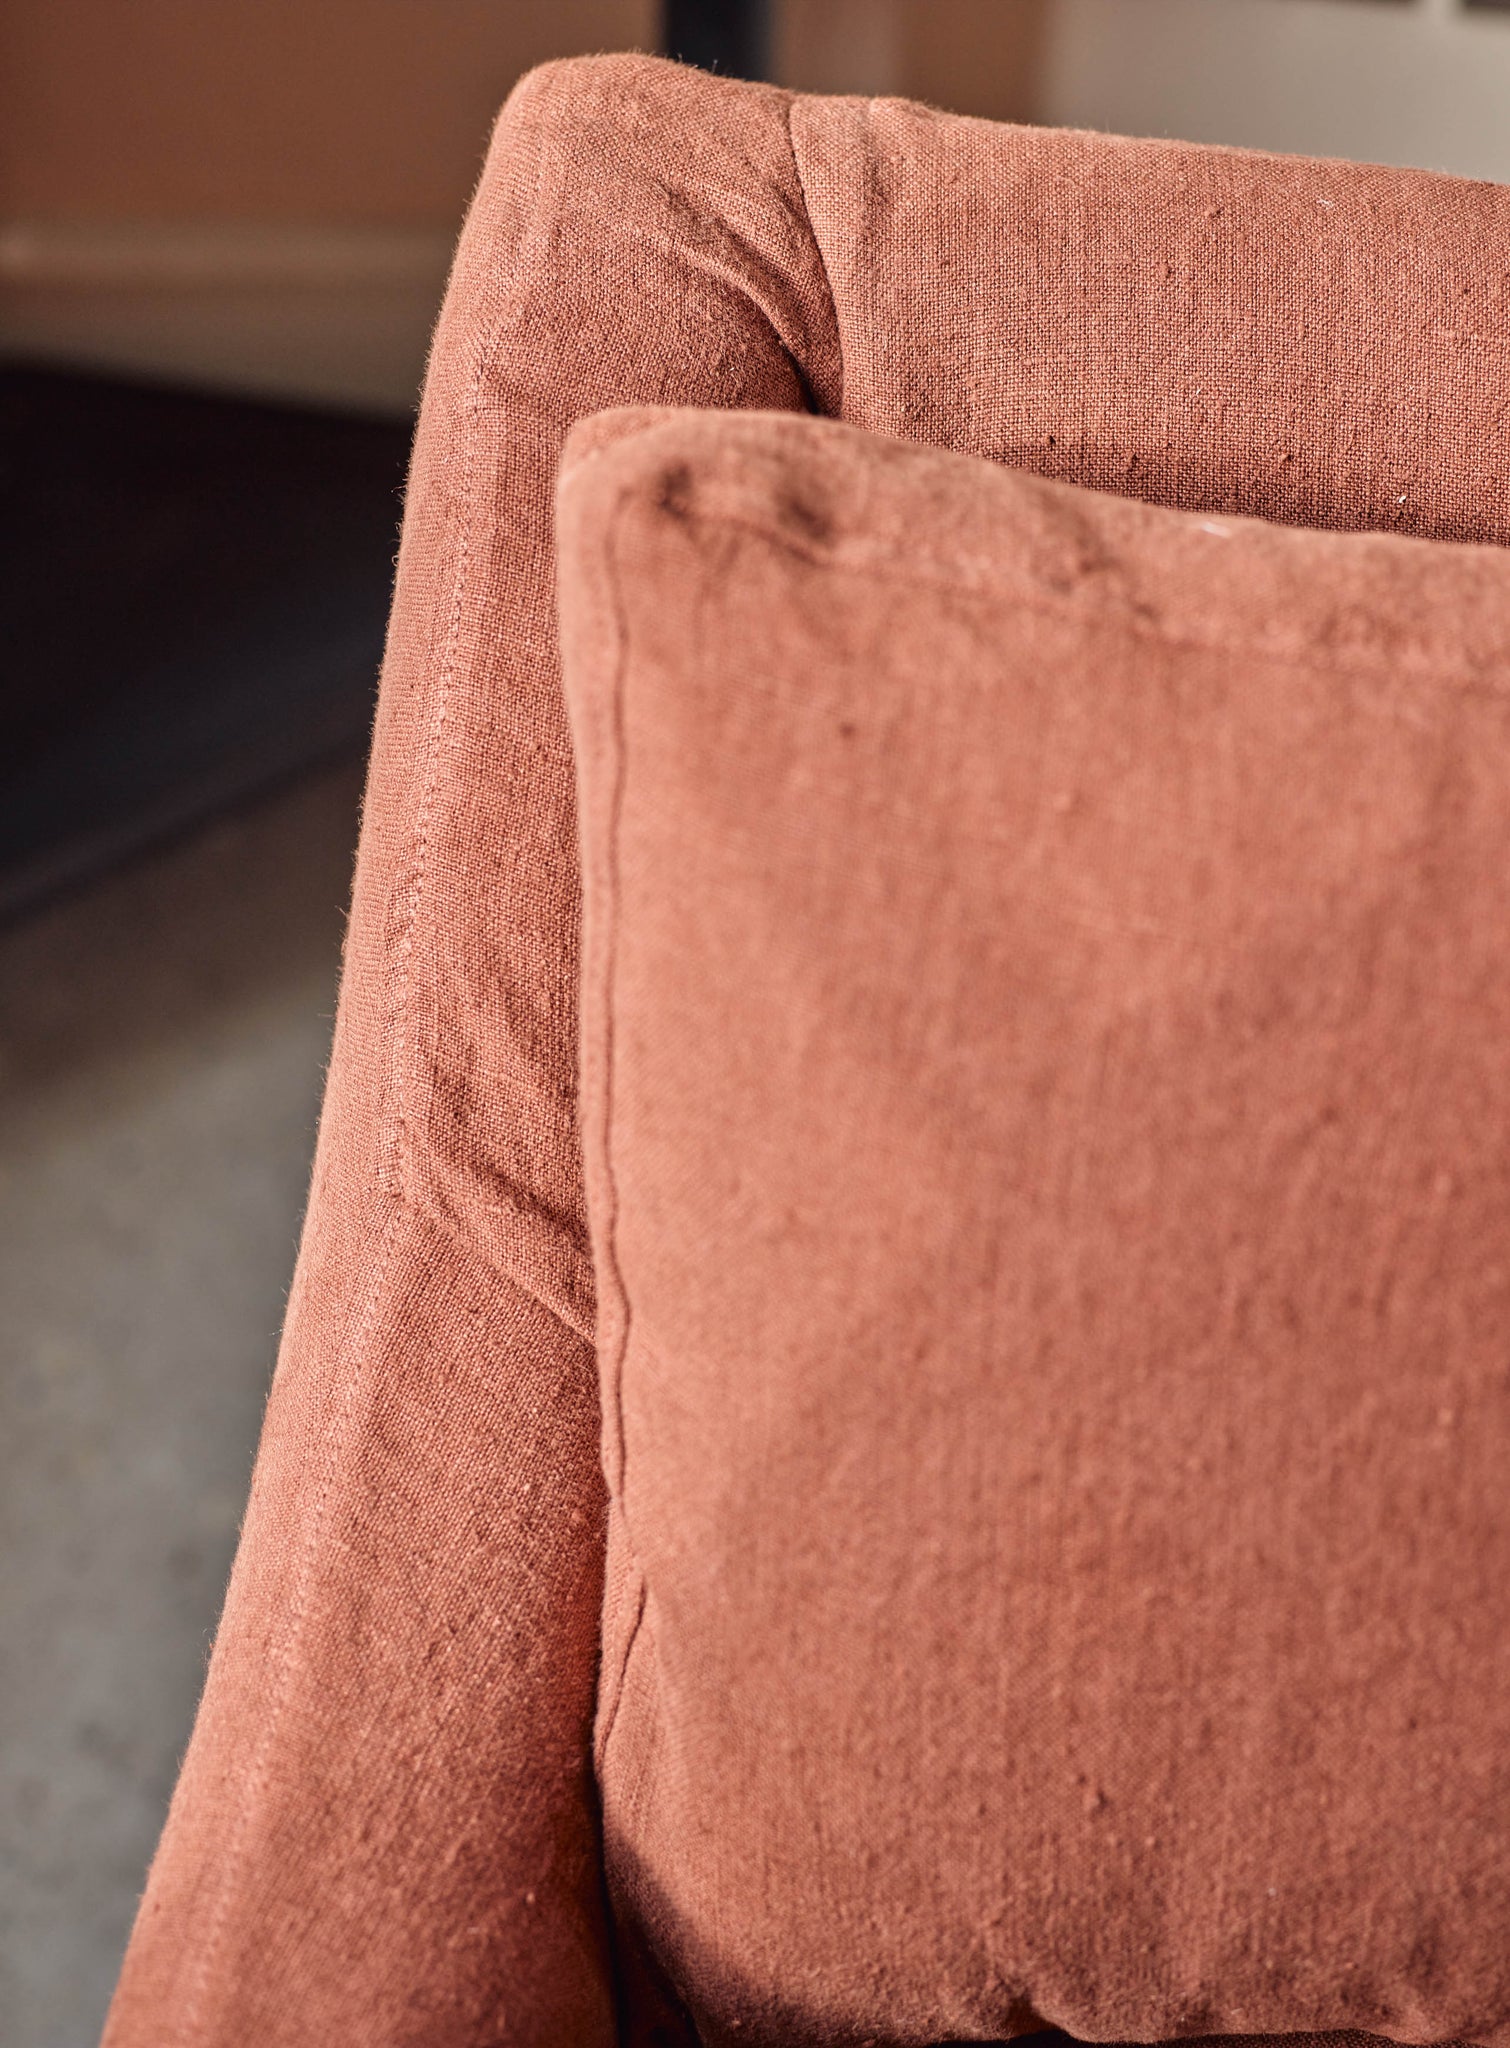 Warren Loose Cover Chaise Sofa, Leaden Grey Linen